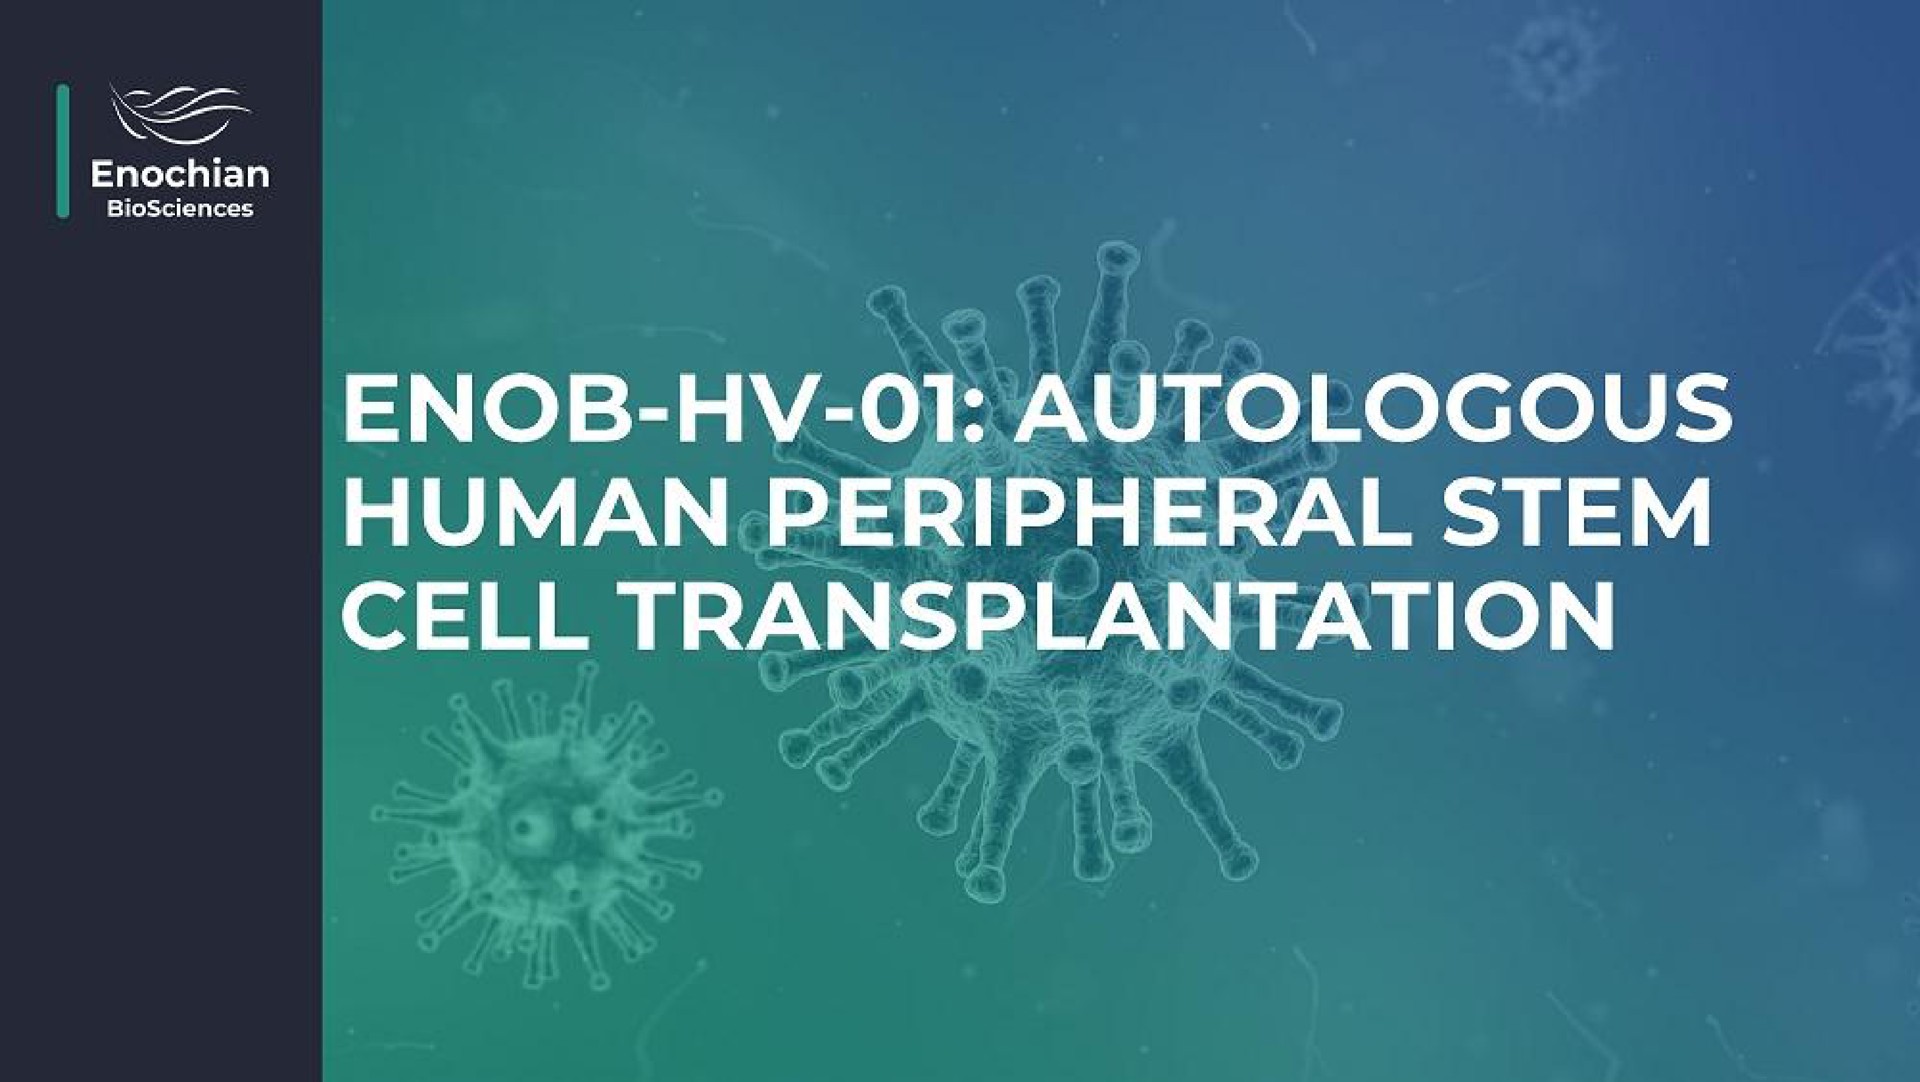 autologous human peripheral stem cell transplantation | Enochian Biosciences